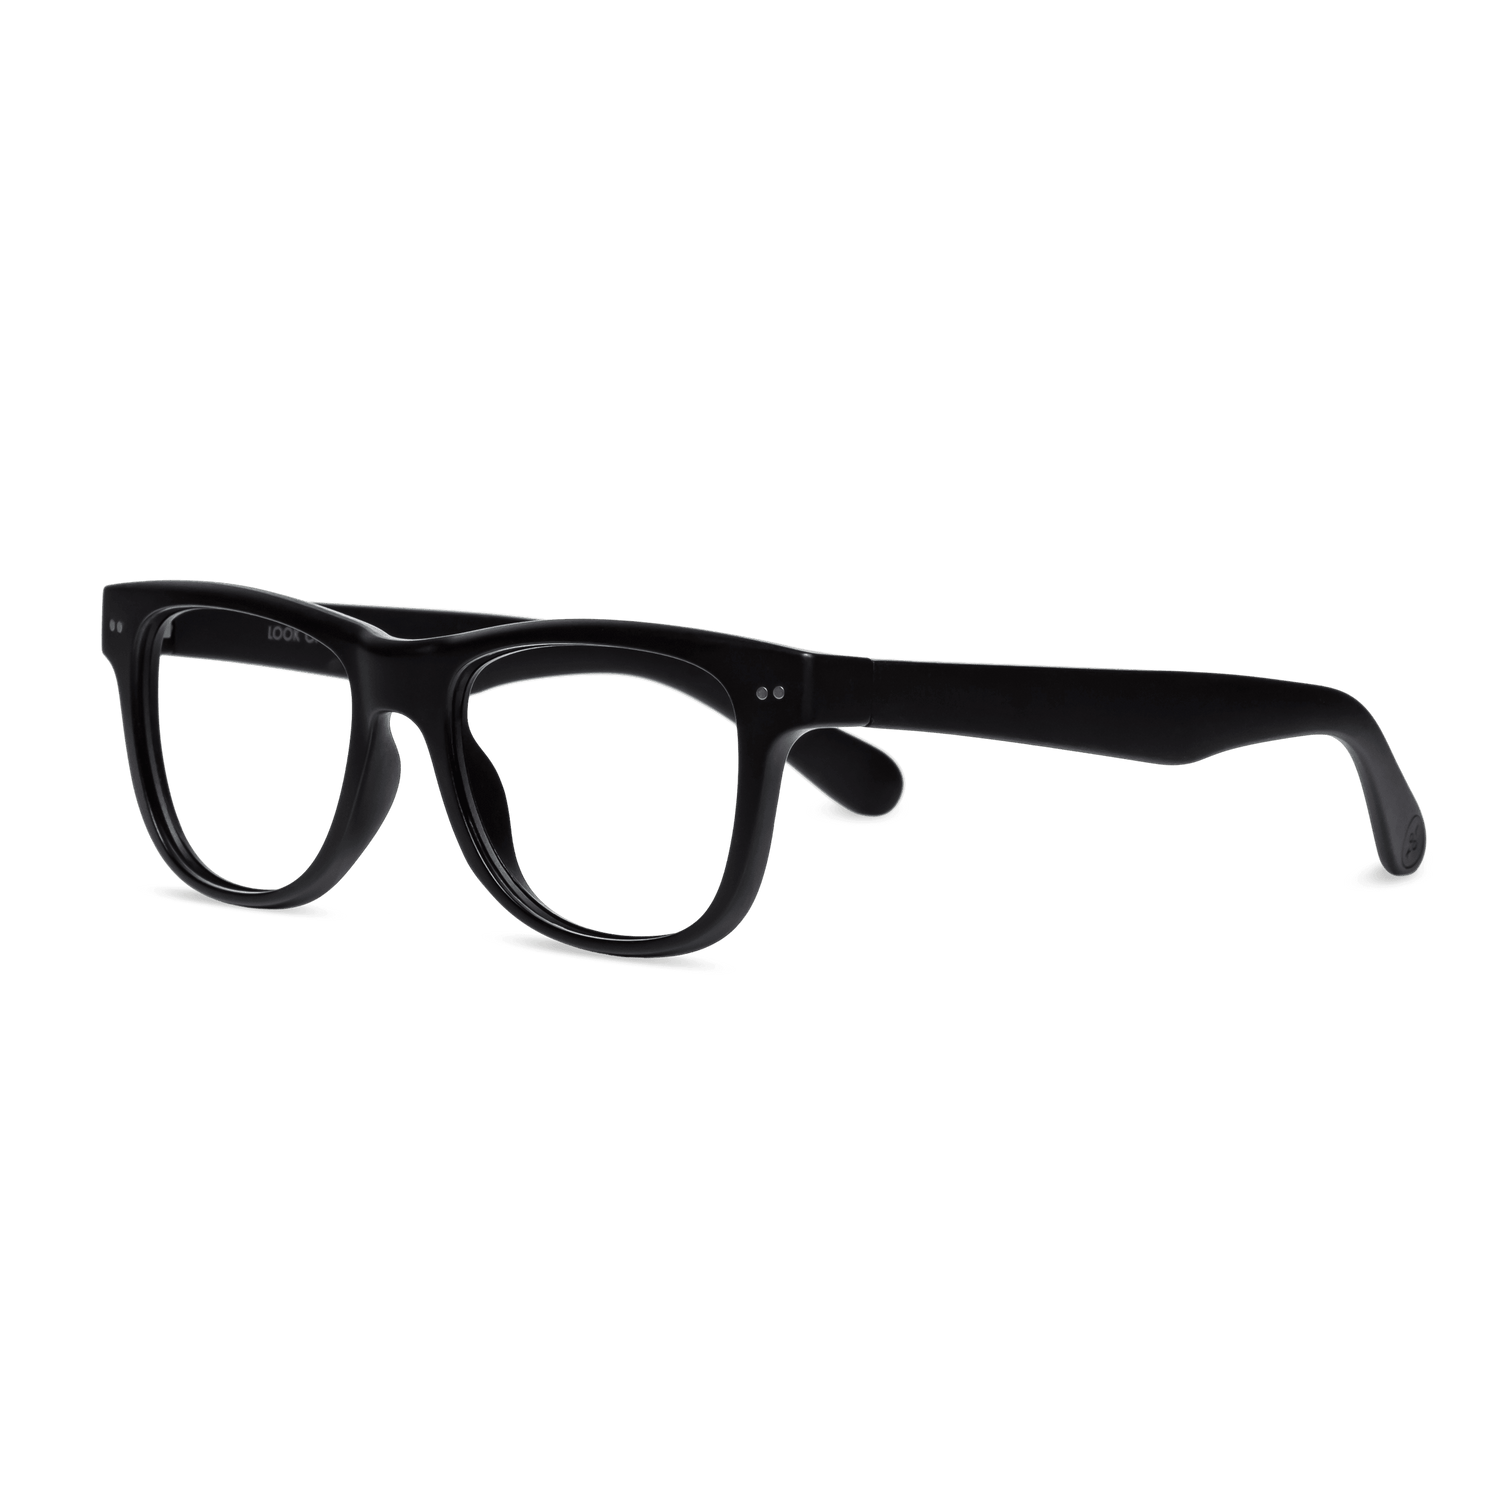 Look Optic Sullivan Square Blue Light Glasses, 52mm - Black/Clear